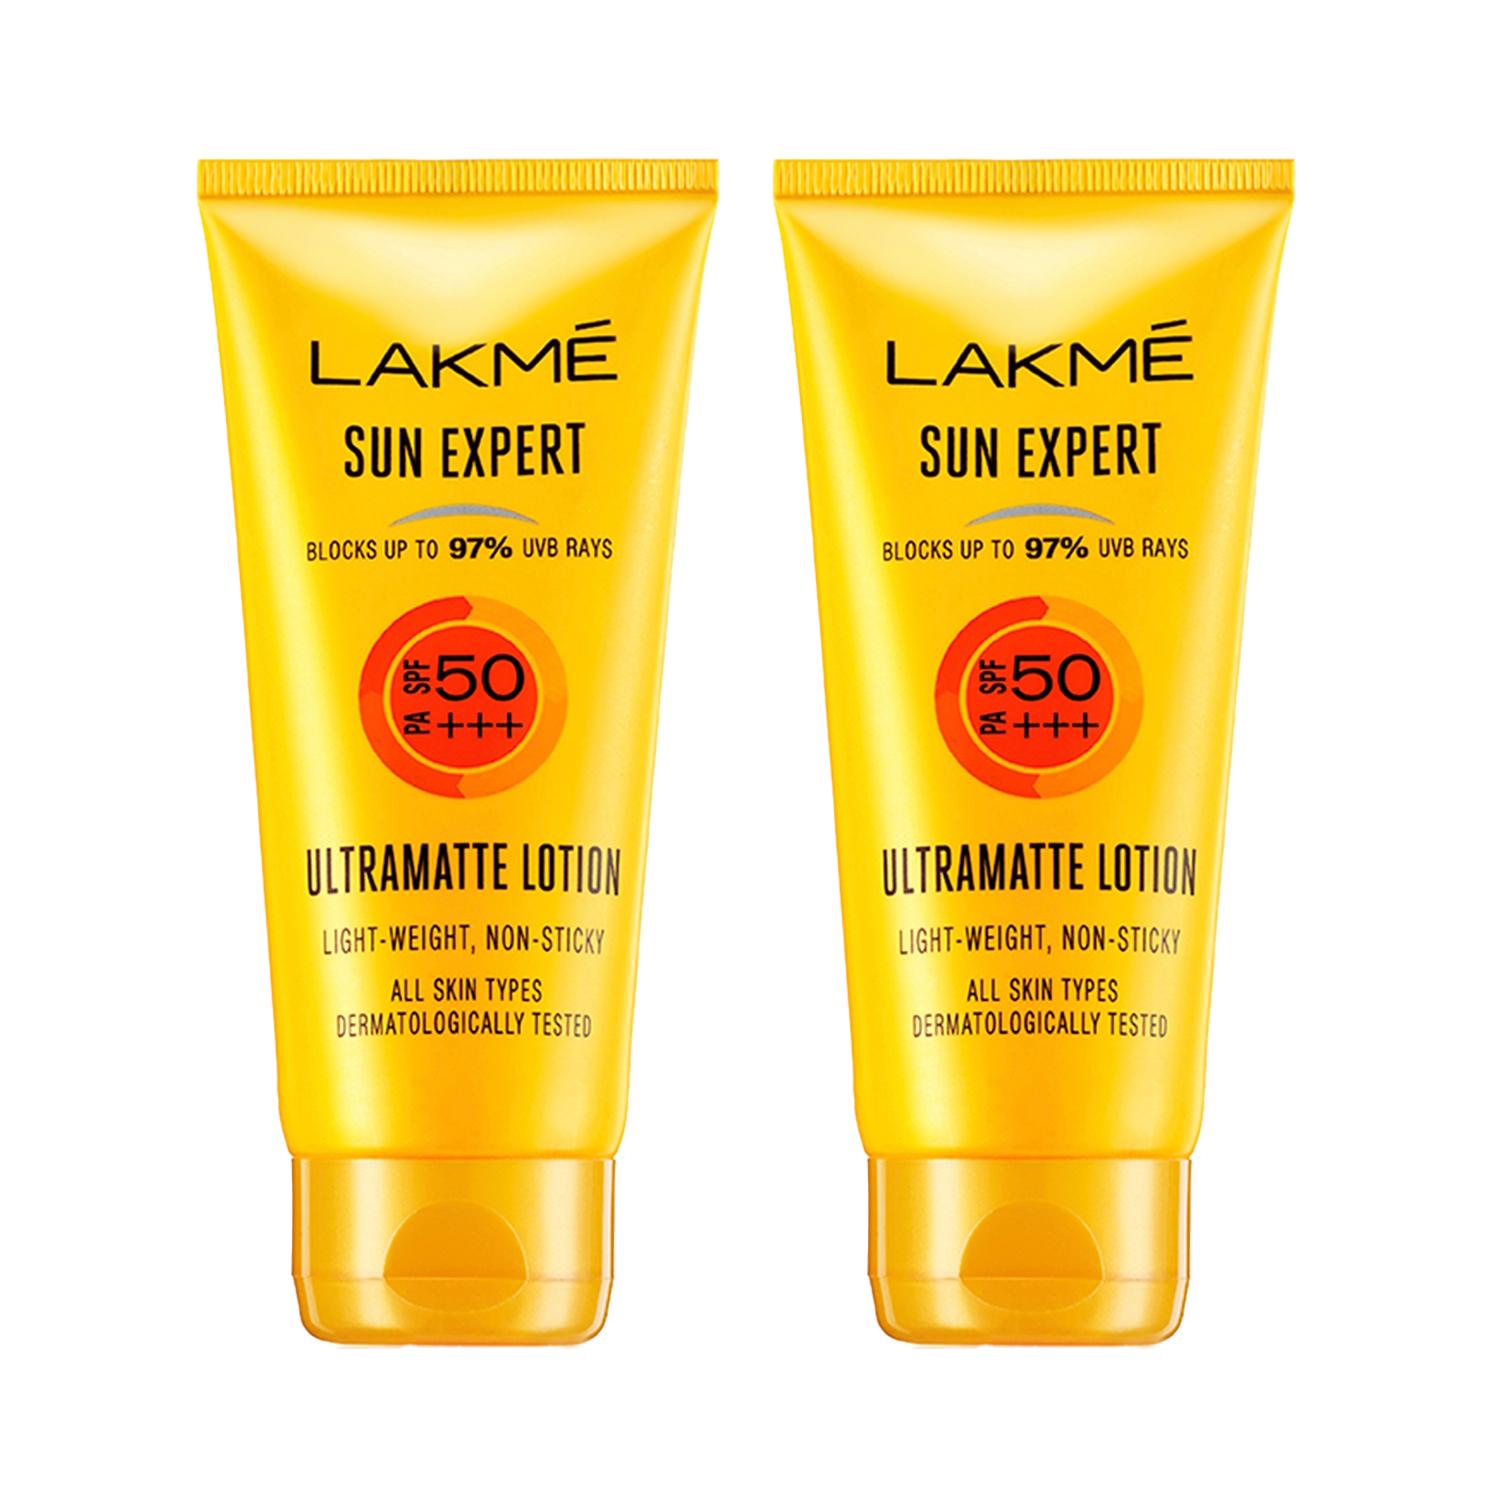 Lakme | Lakme Sun Expert SPF 50 PA+++ Ultra Matte Lotion Sunscreen - Pack Of 2 Combo